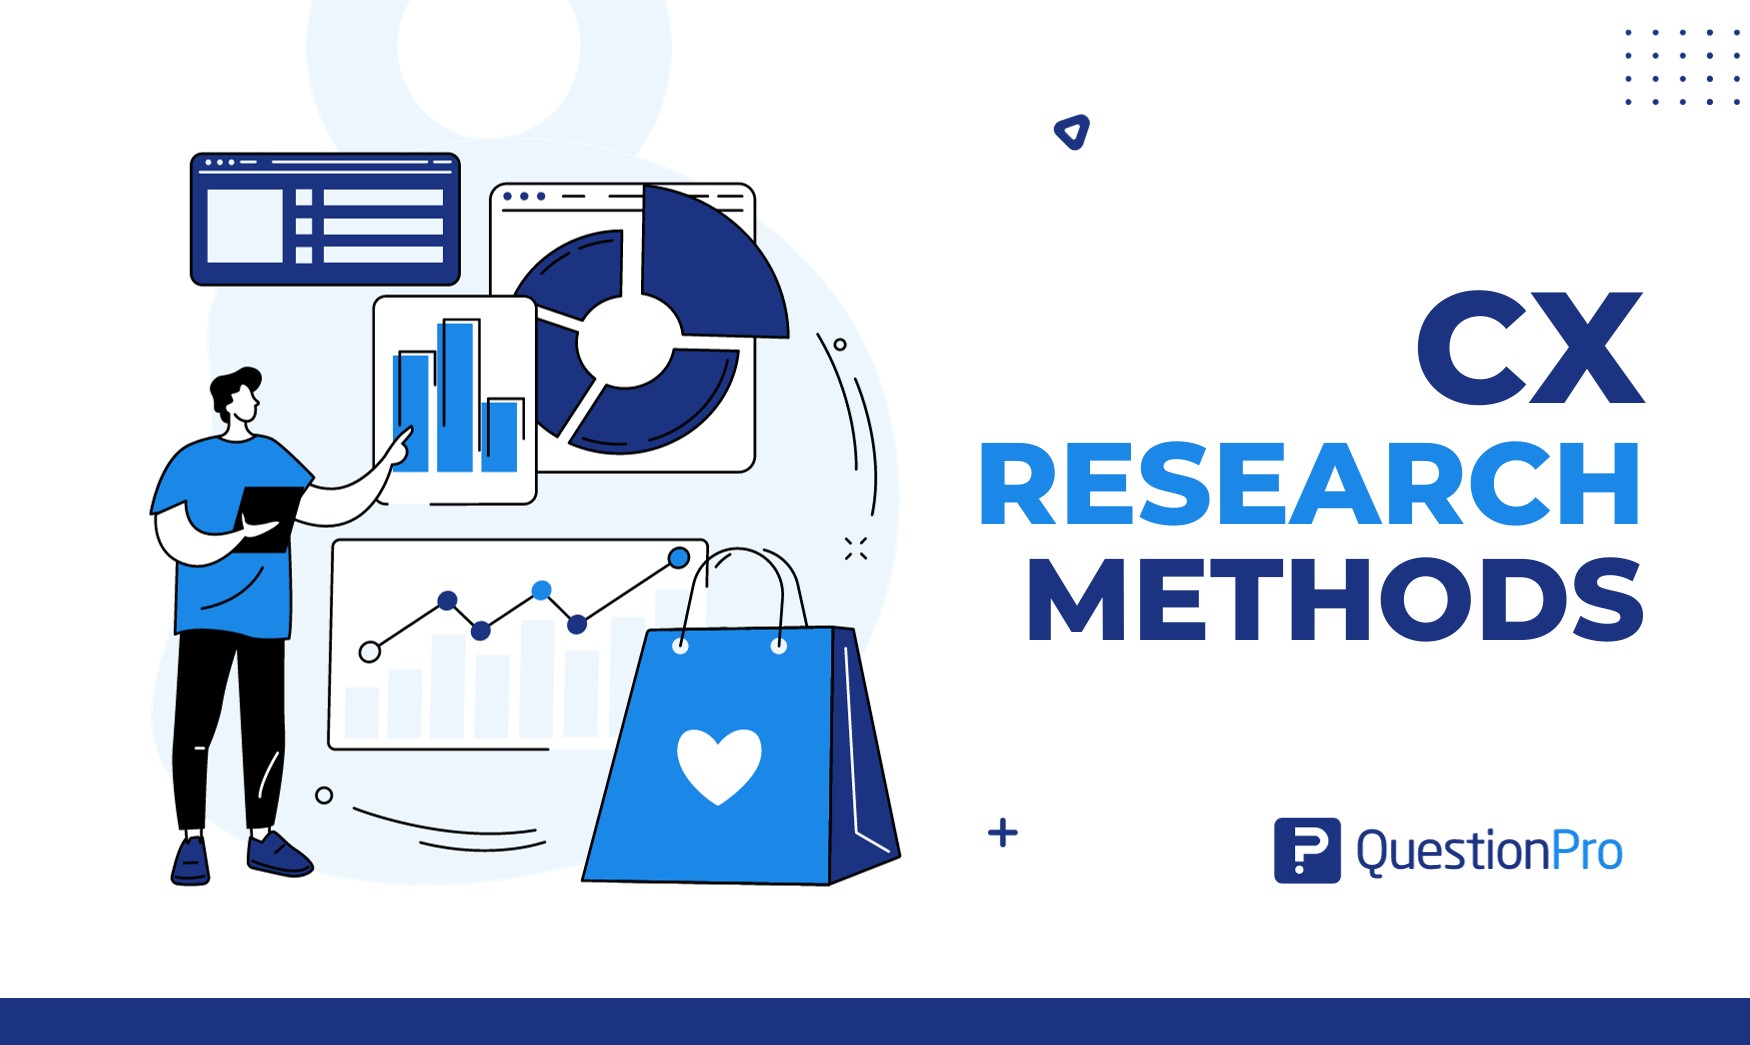 CX Research Methods